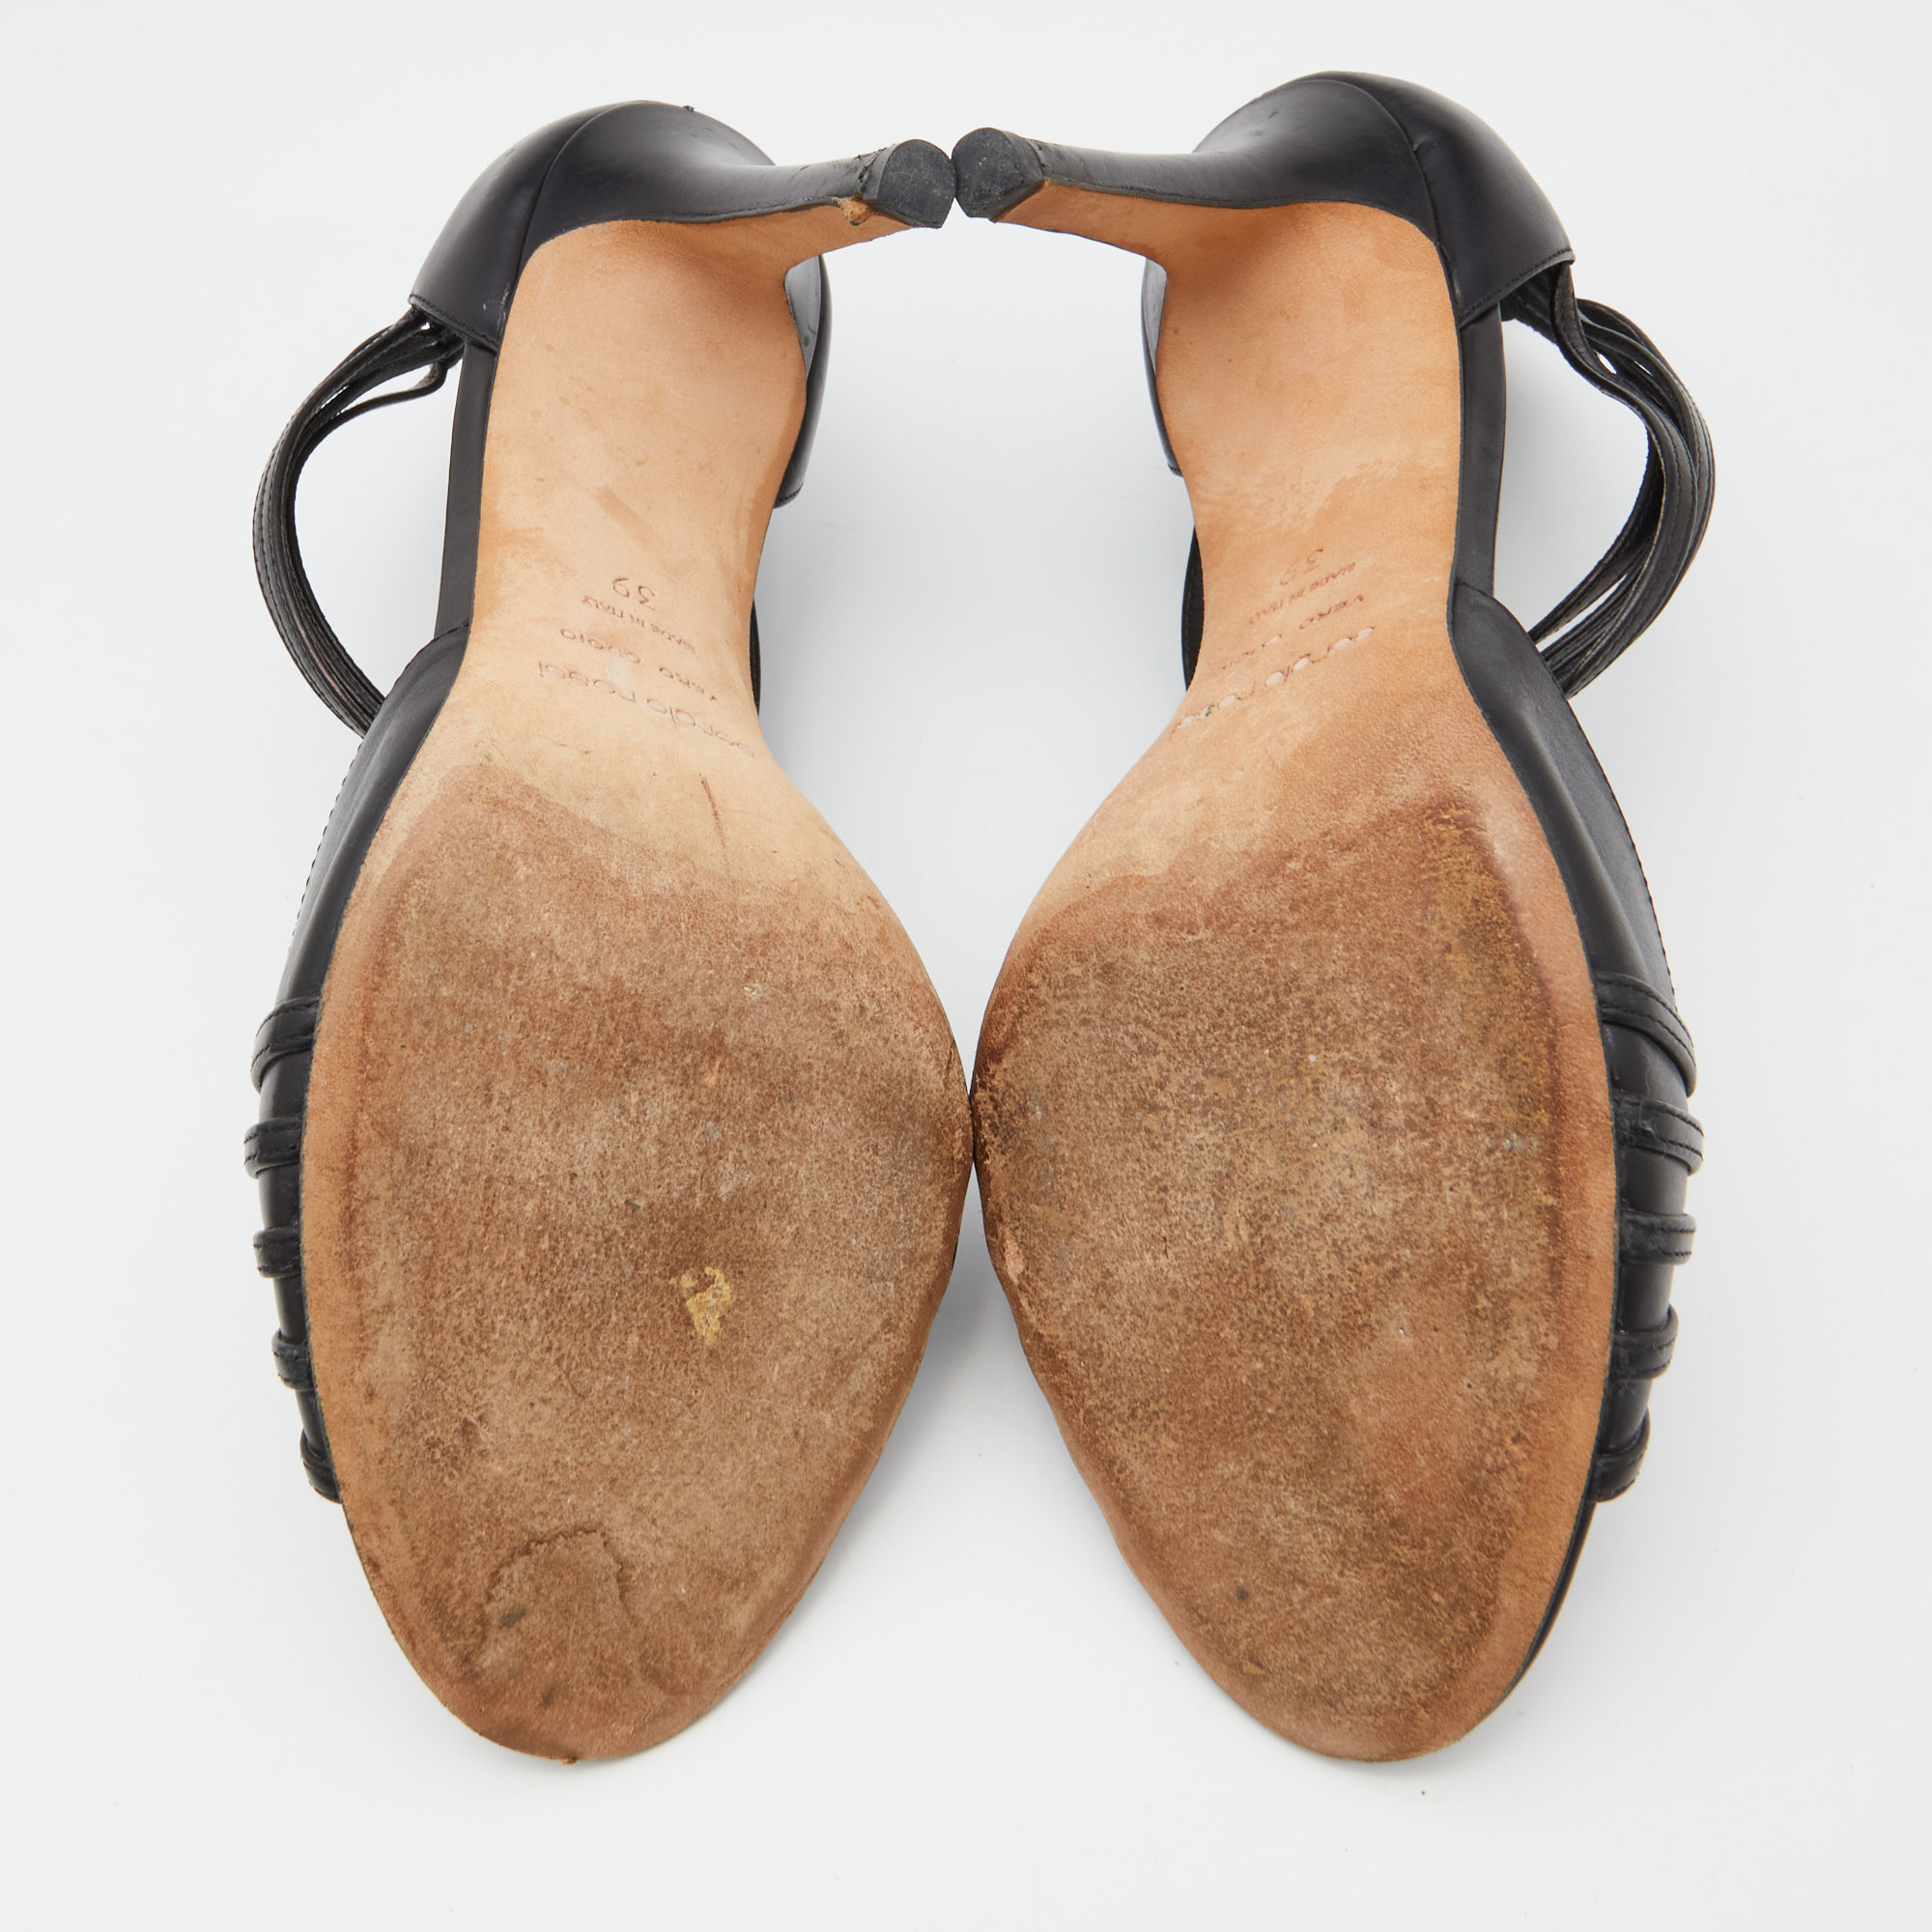 Sergio Rossi Black Leather Strappy Peep Toe Sandals Size 39